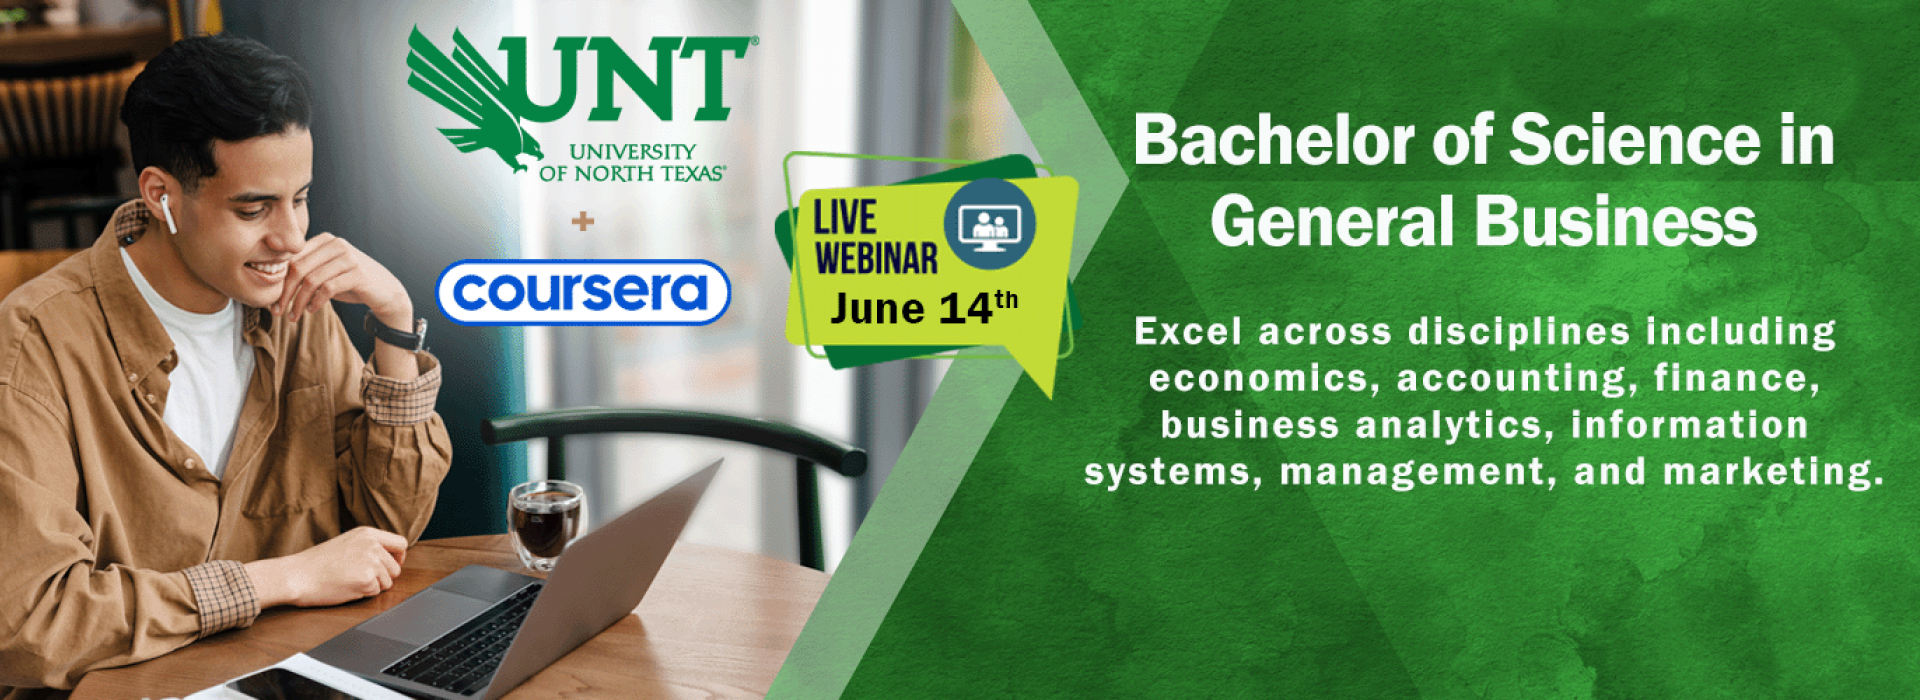 UNT Online Bachelor of Science in General Business - Webinar June 14